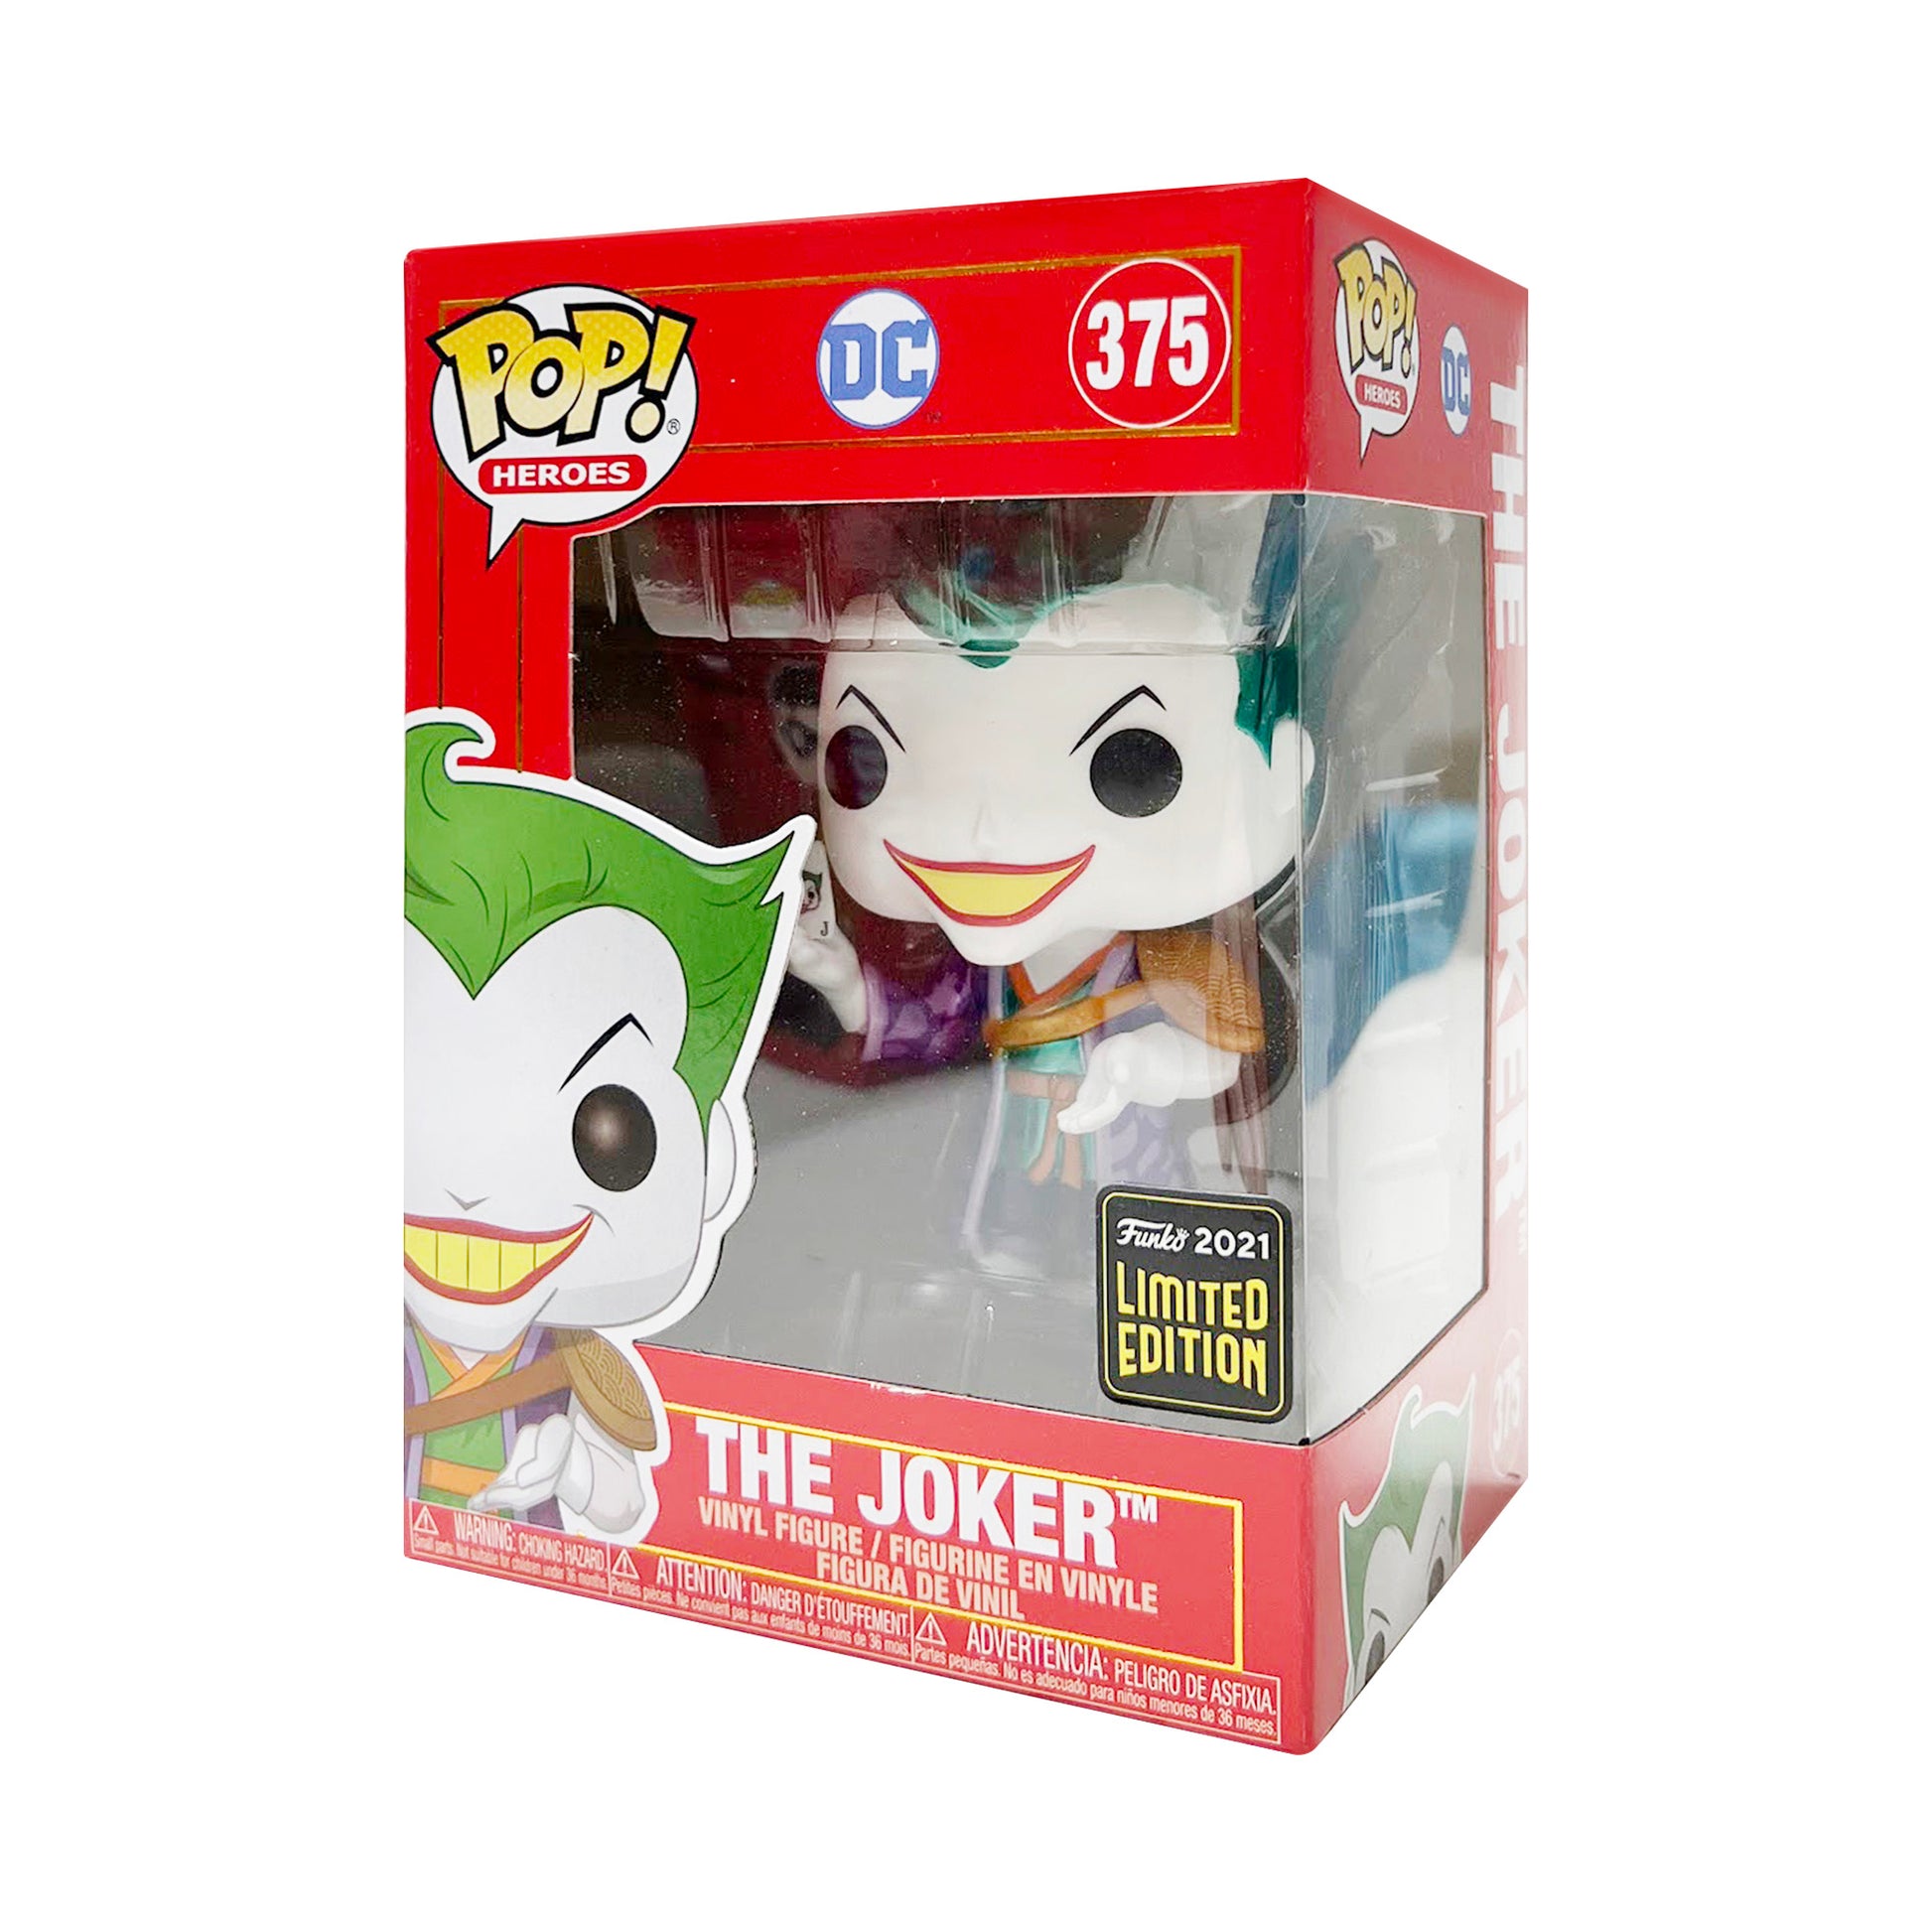 Funko Pops The Joker  Funko pop, Funko pop collection, Funko pop toys